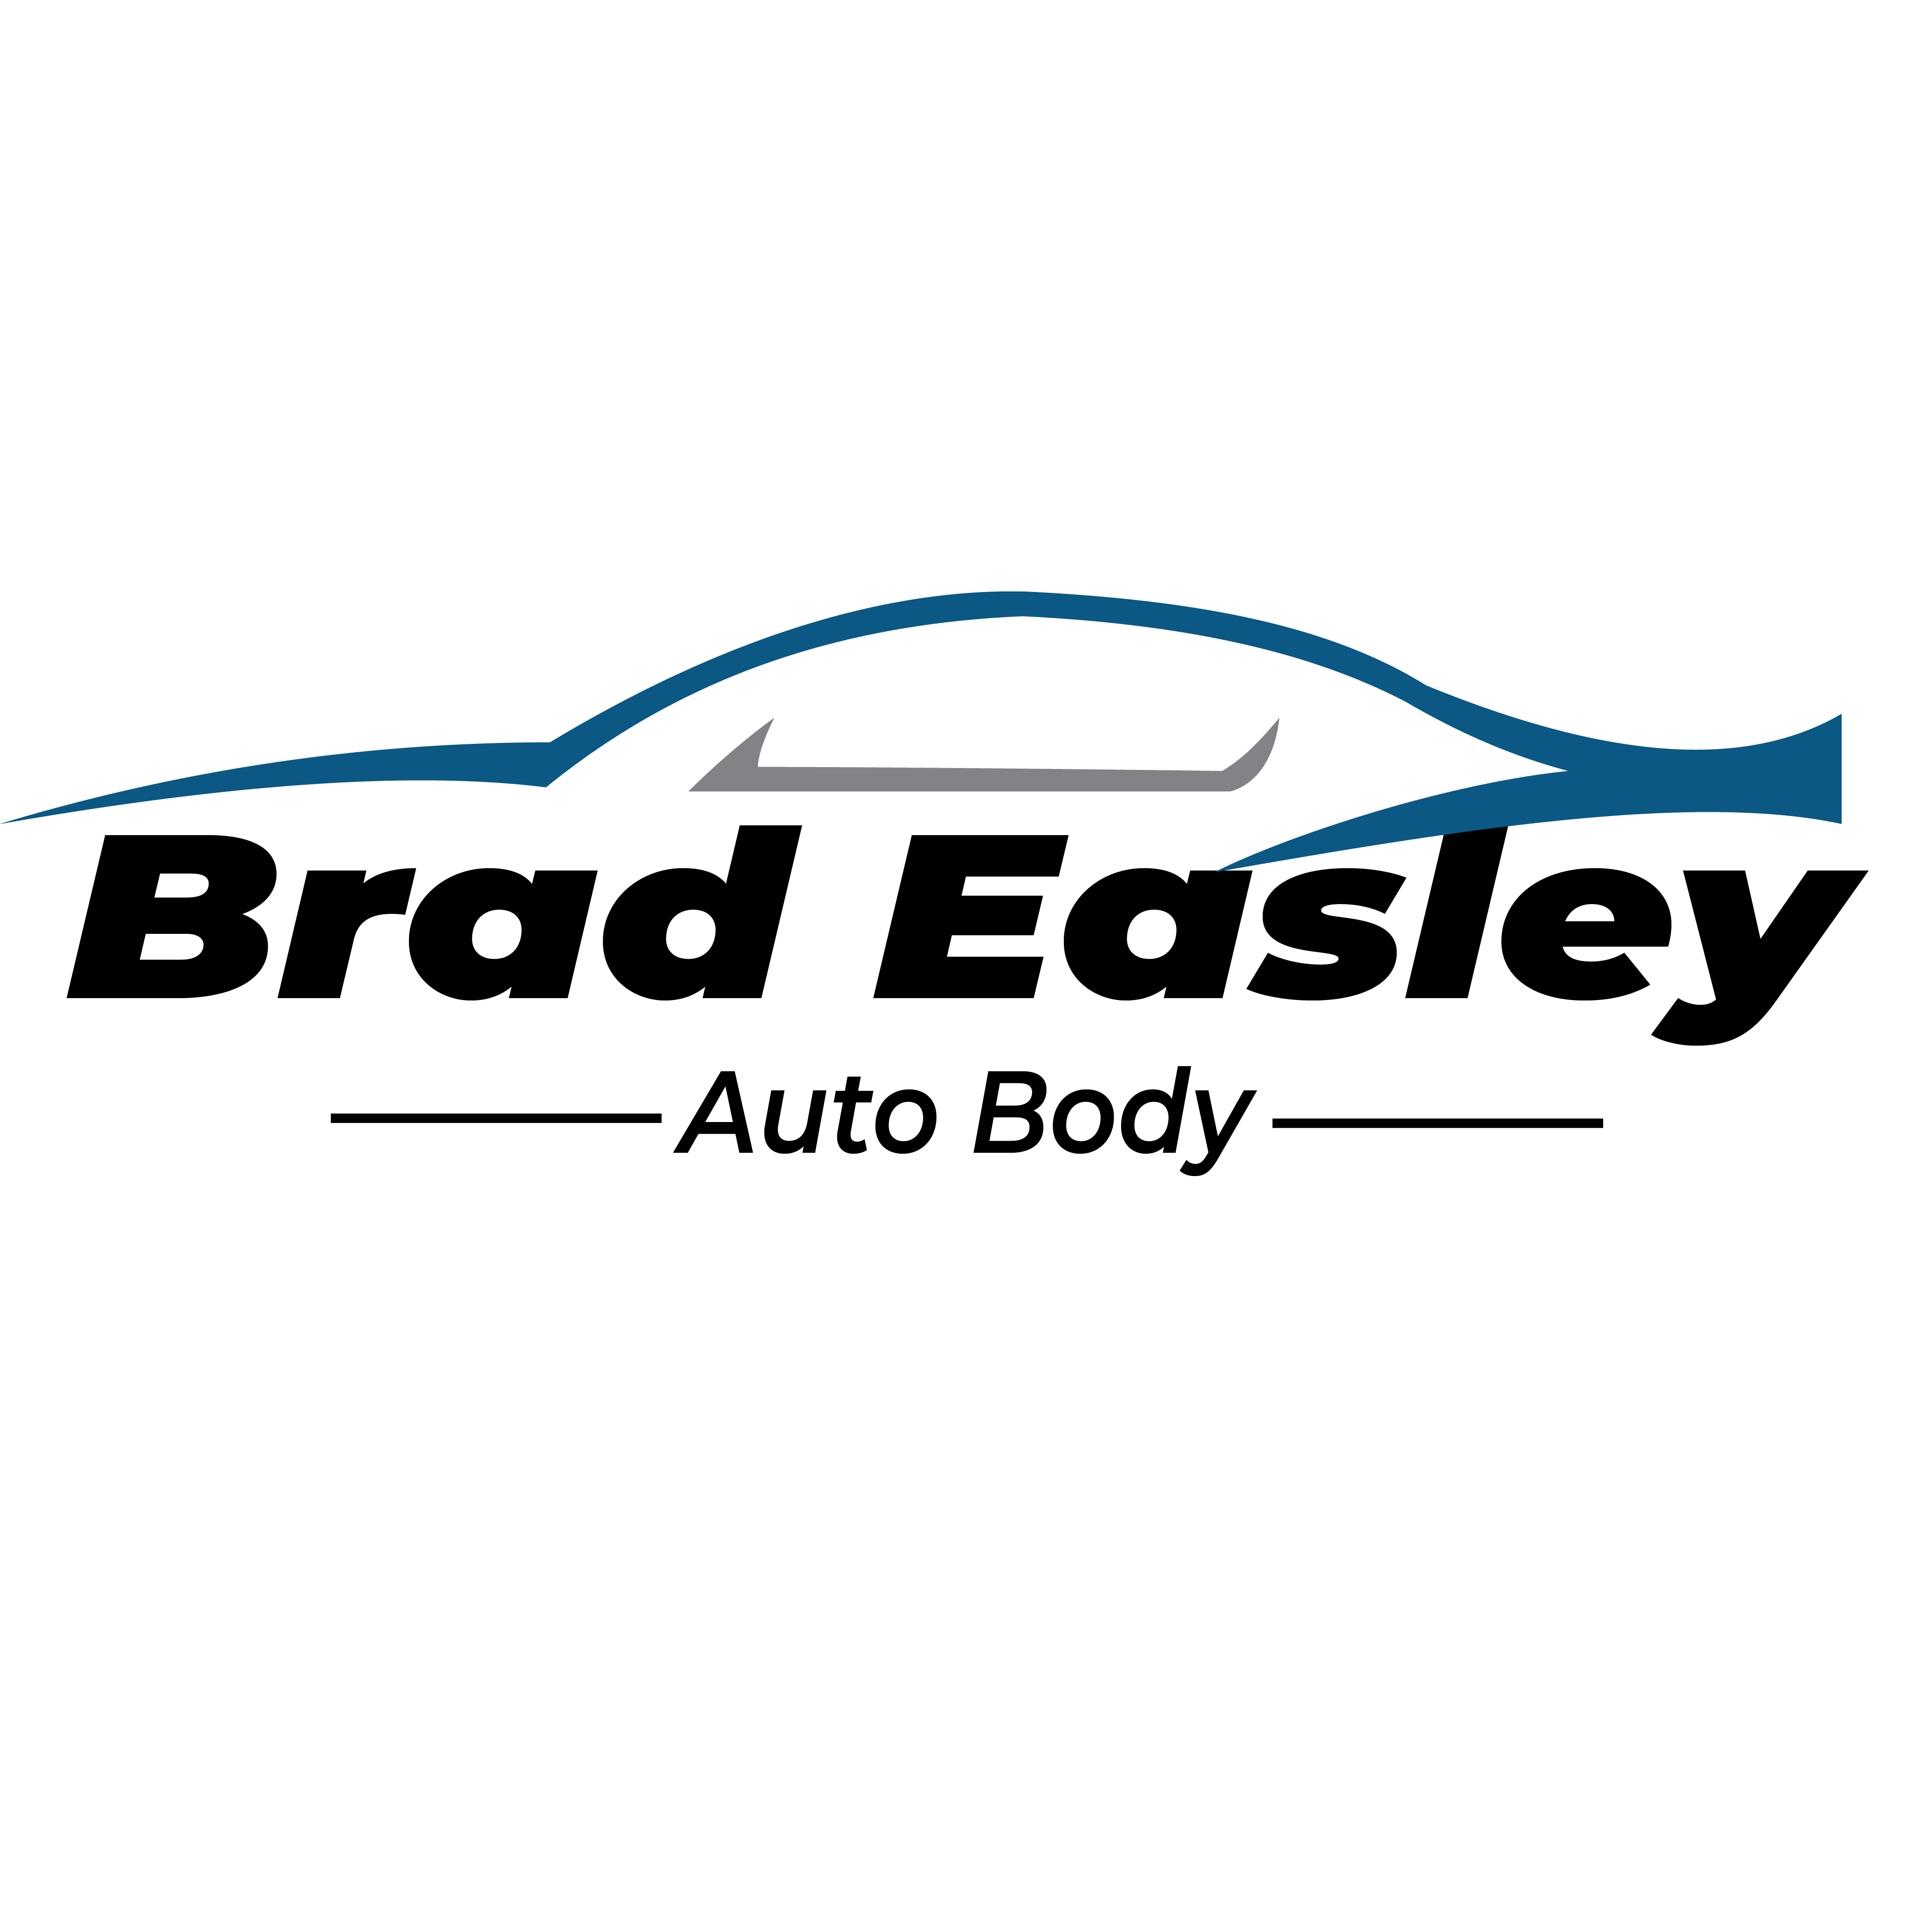 Brad Easley Auto Body - Council, ID 83612 - (208)250-7787 | ShowMeLocal.com